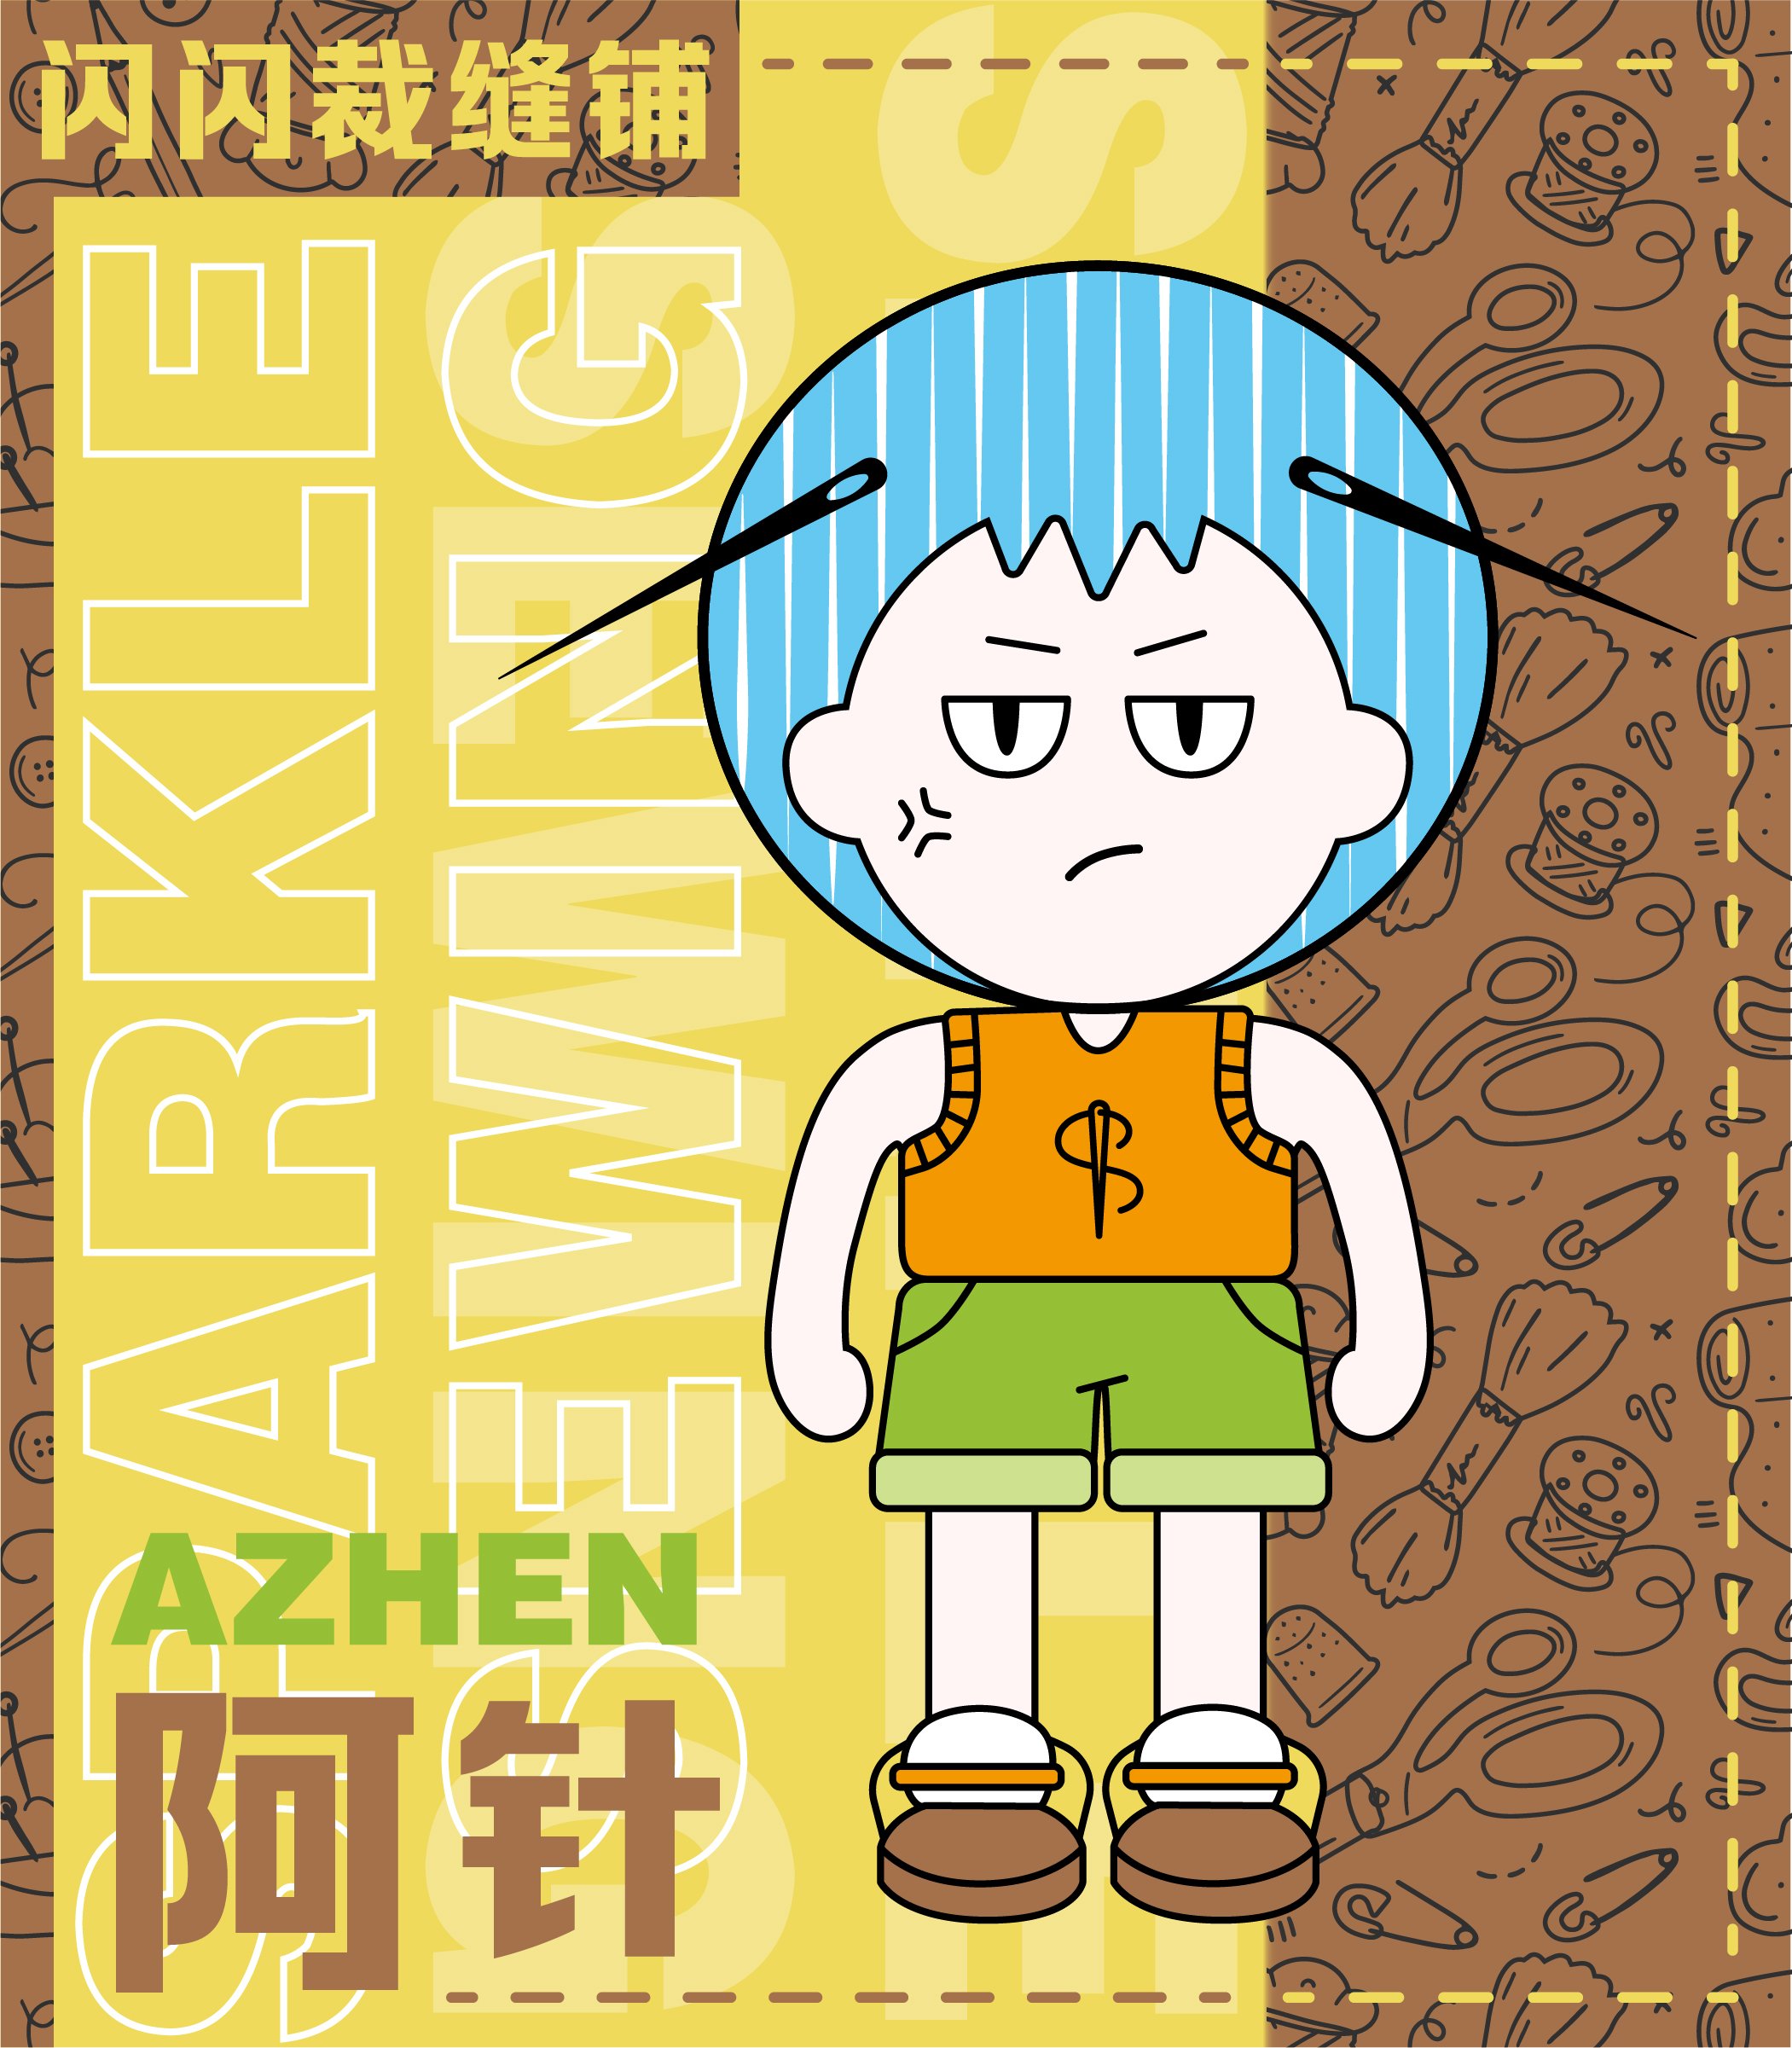 Sparkle Sewing Shop Character - AZHEN